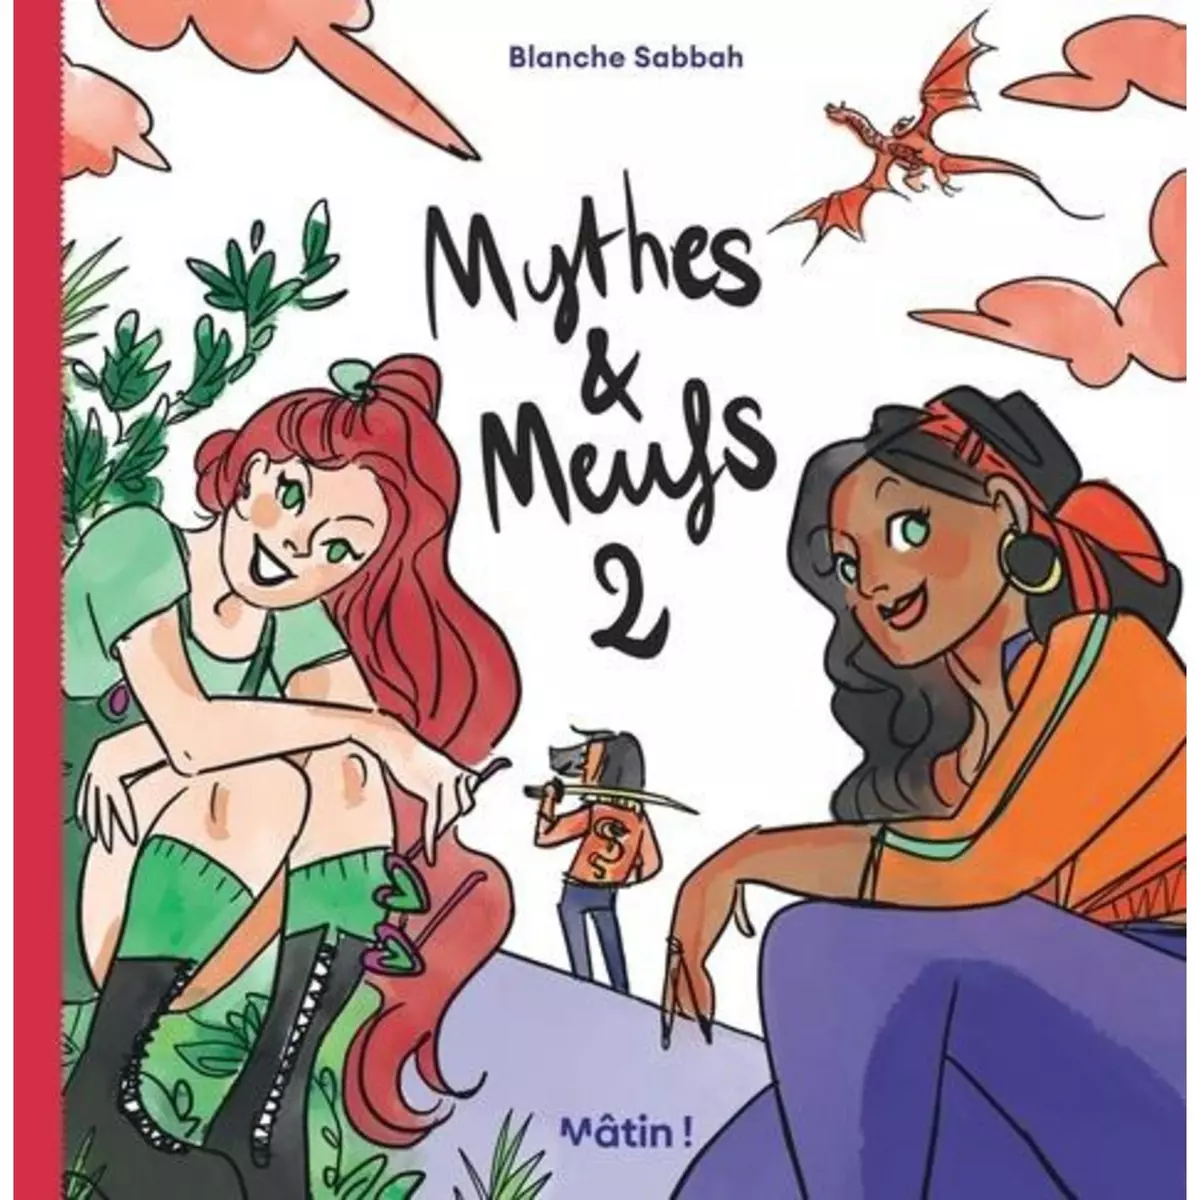  MYTHES & MEUFS TOME 2 , Sabbah Blanche